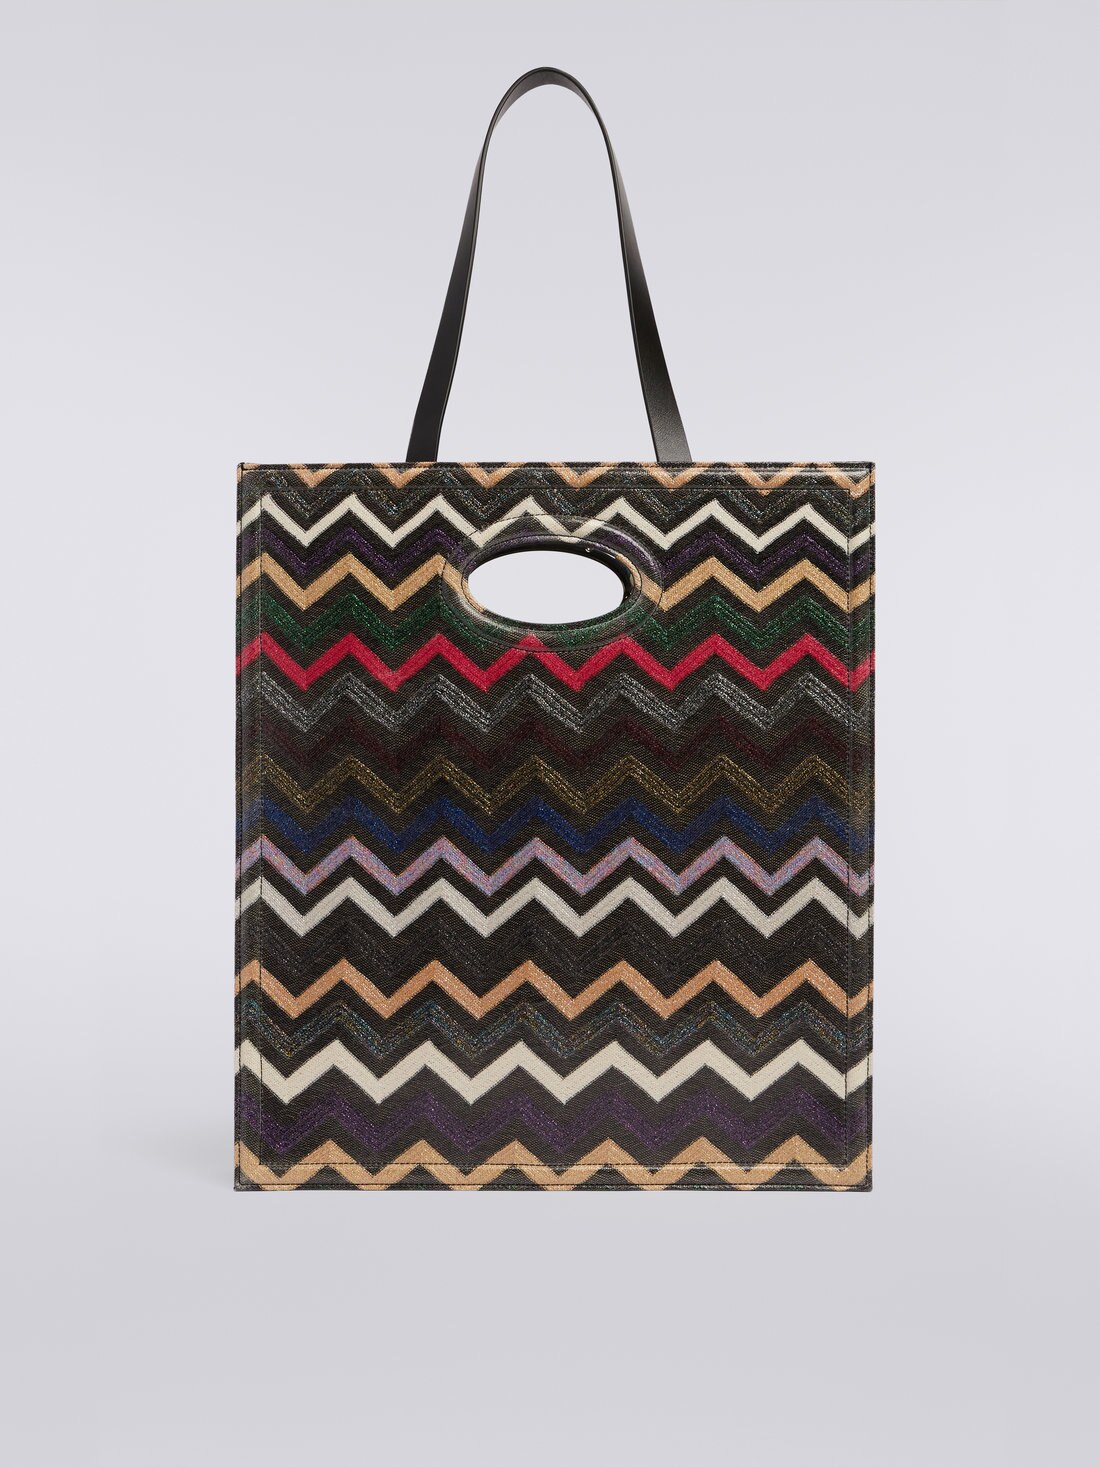 Zigzag lamé viscose bag, Multicoloured  - 8051575804274 - 2